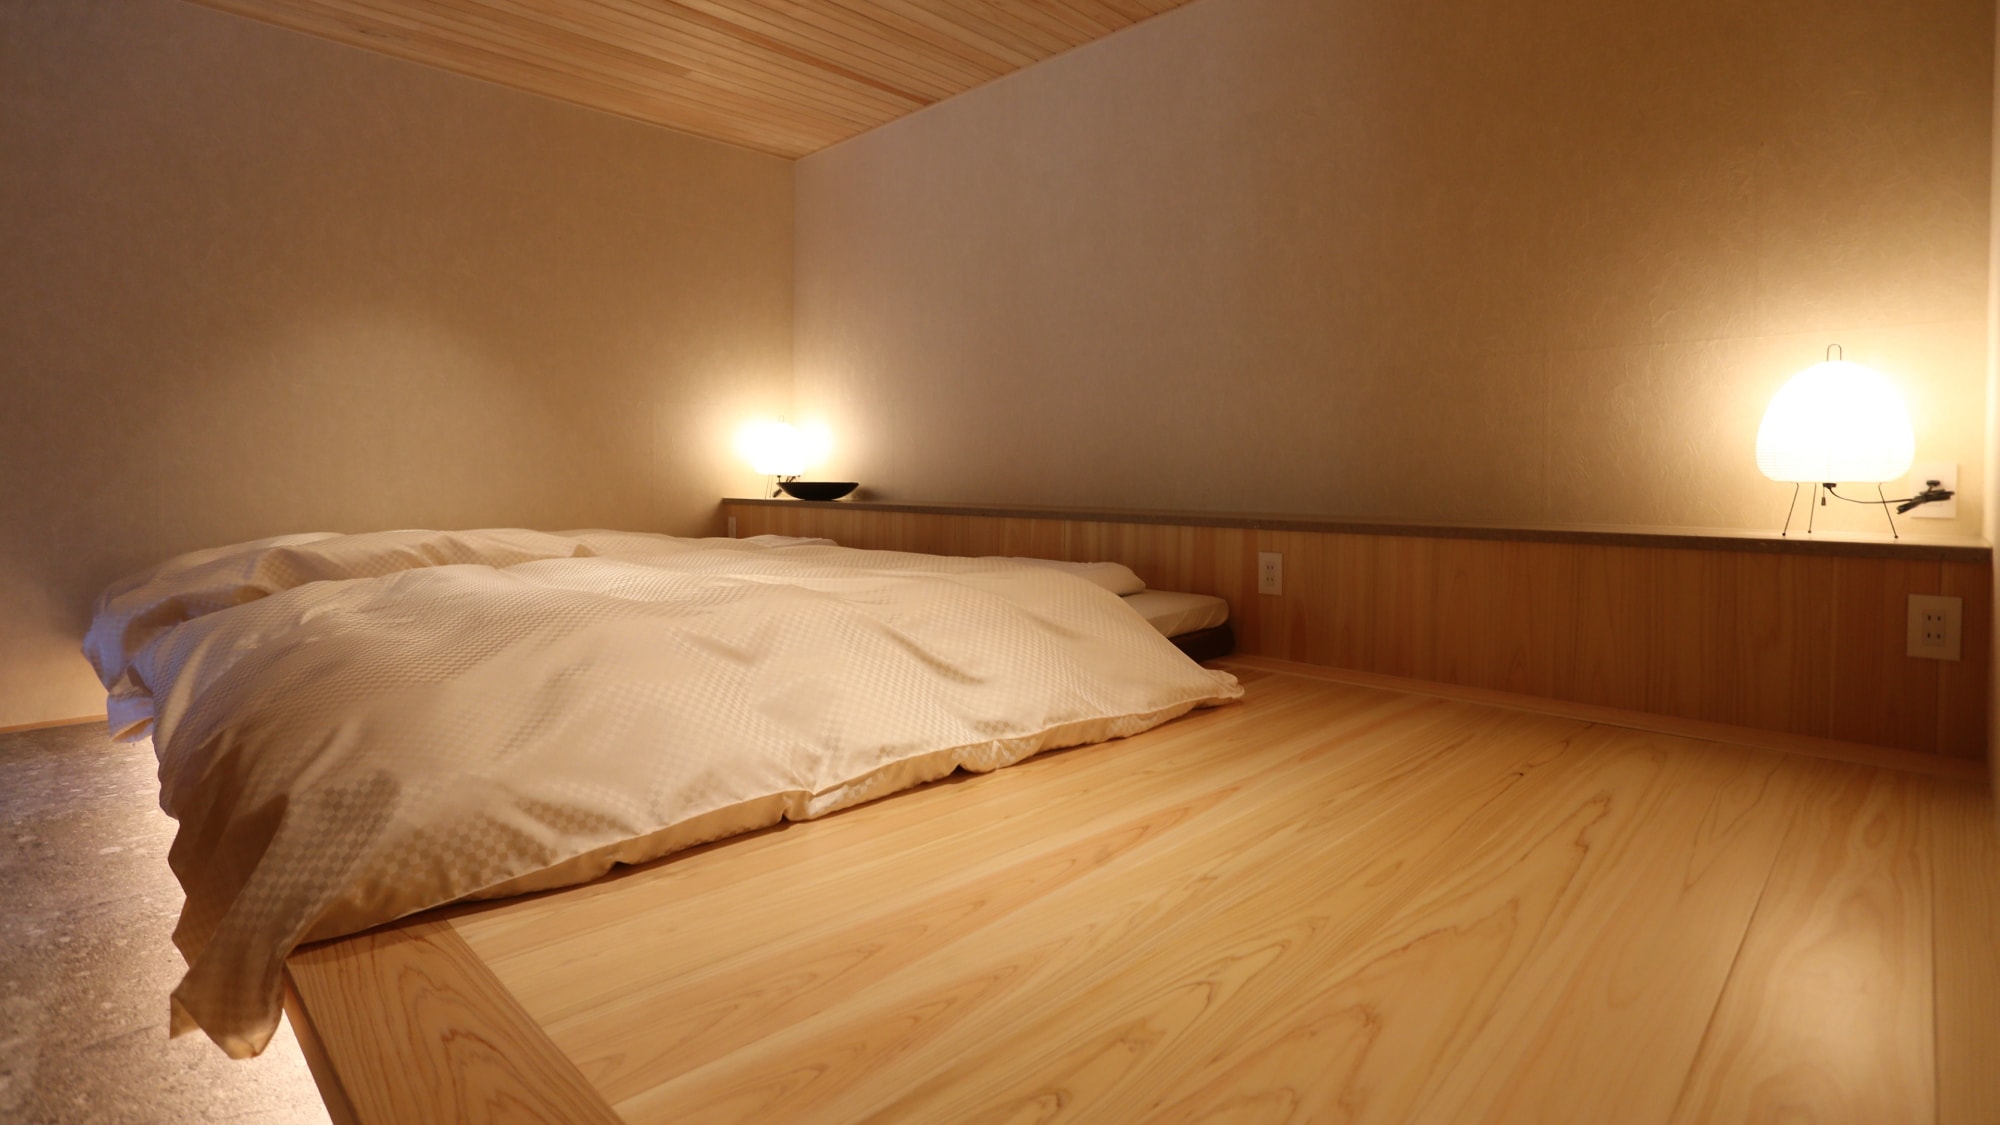 Uses memory foam mattress and luxury duvet developed by villa "Aioi" POLA